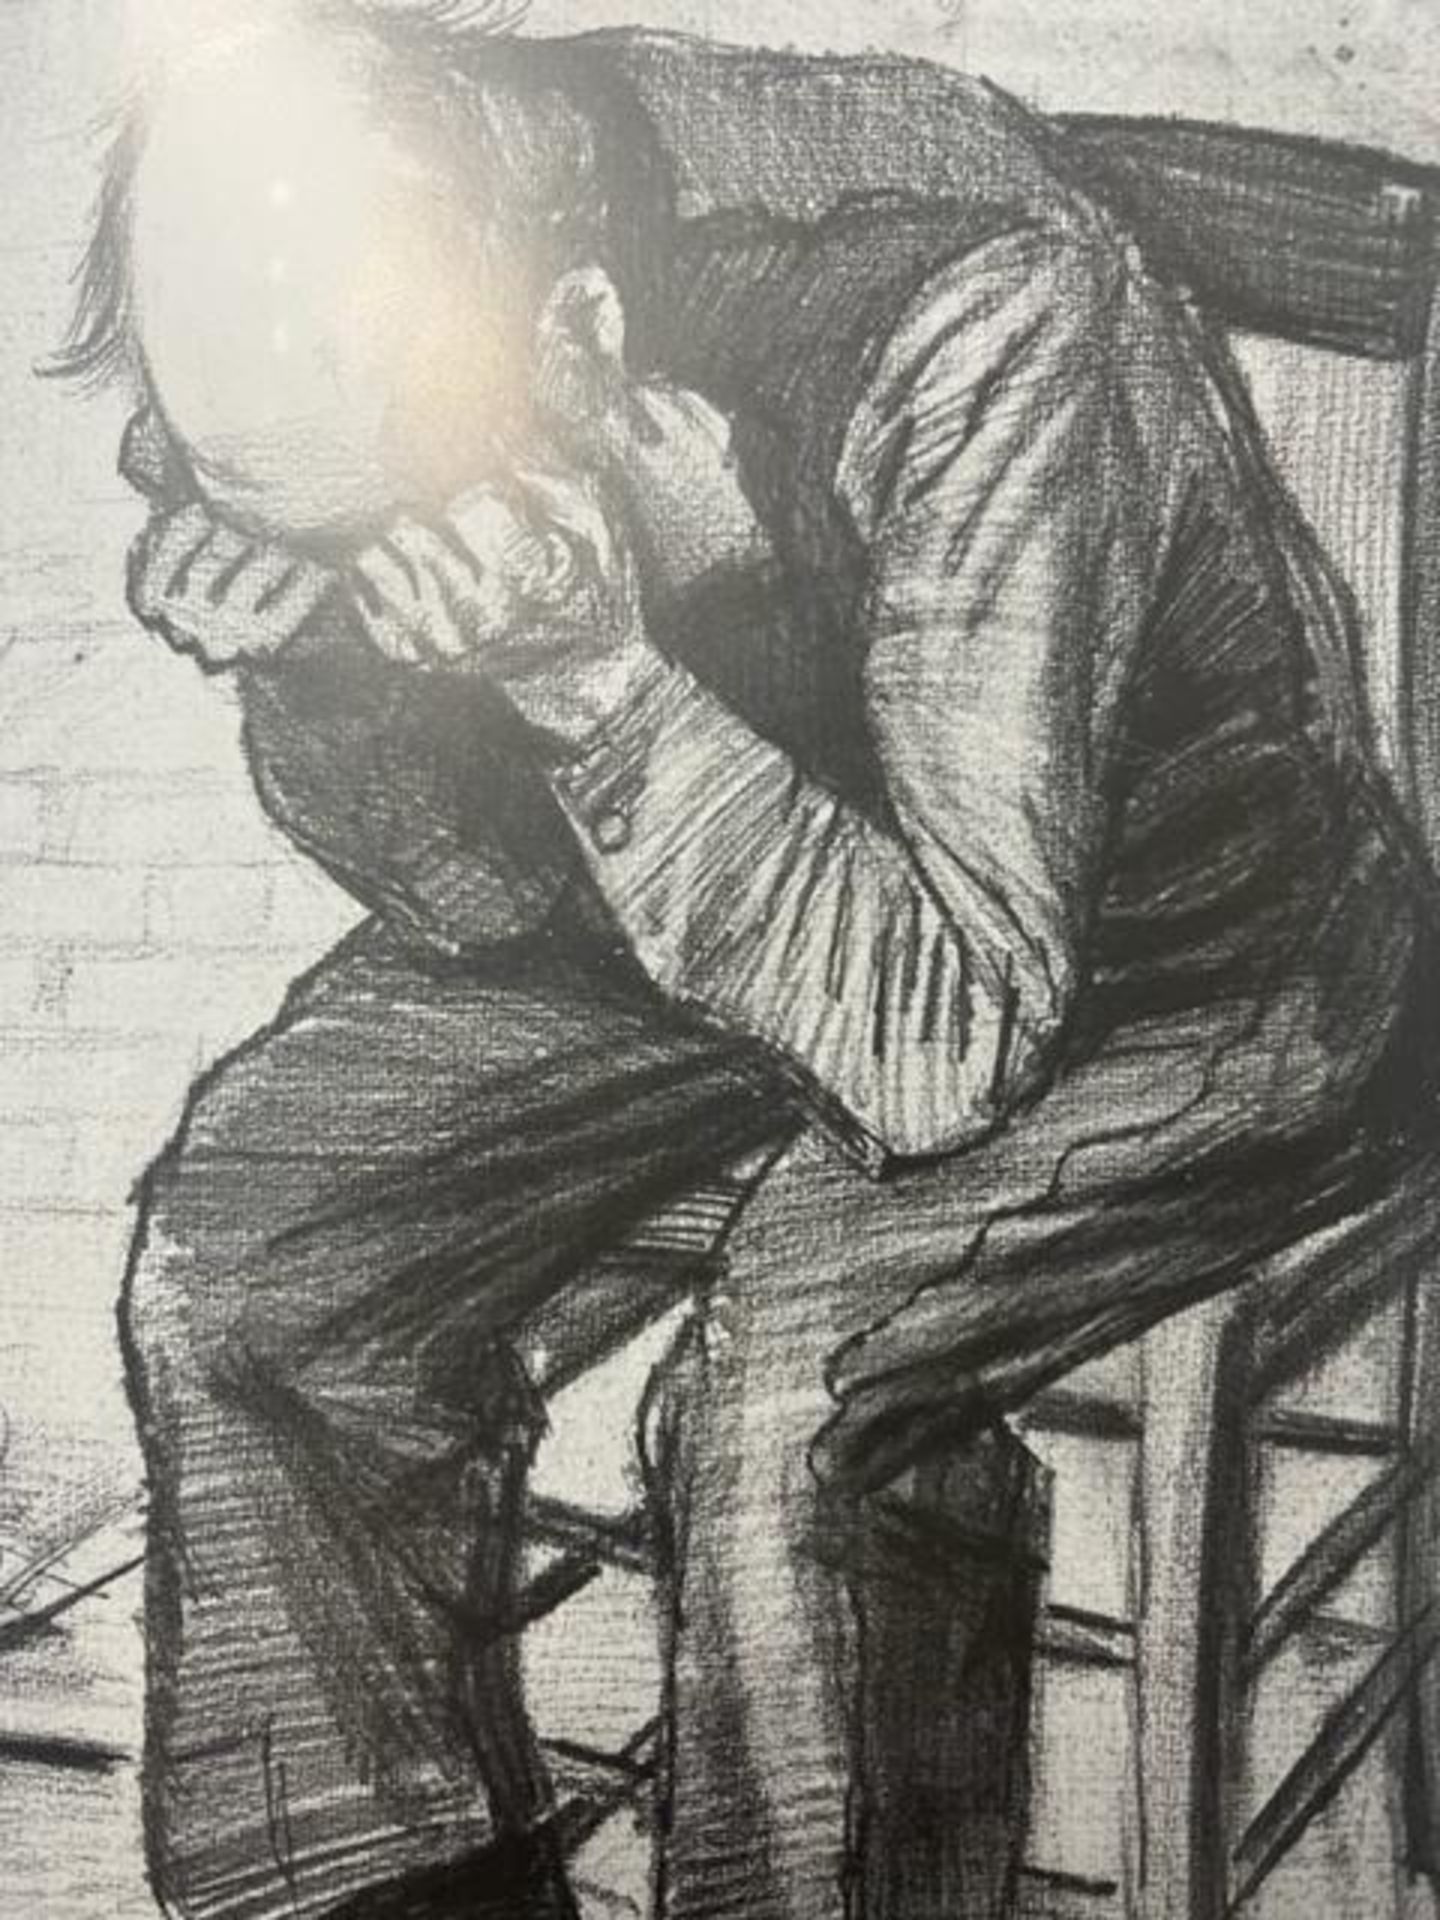 Vincent van Gogh "Old Man in Grief" Print.